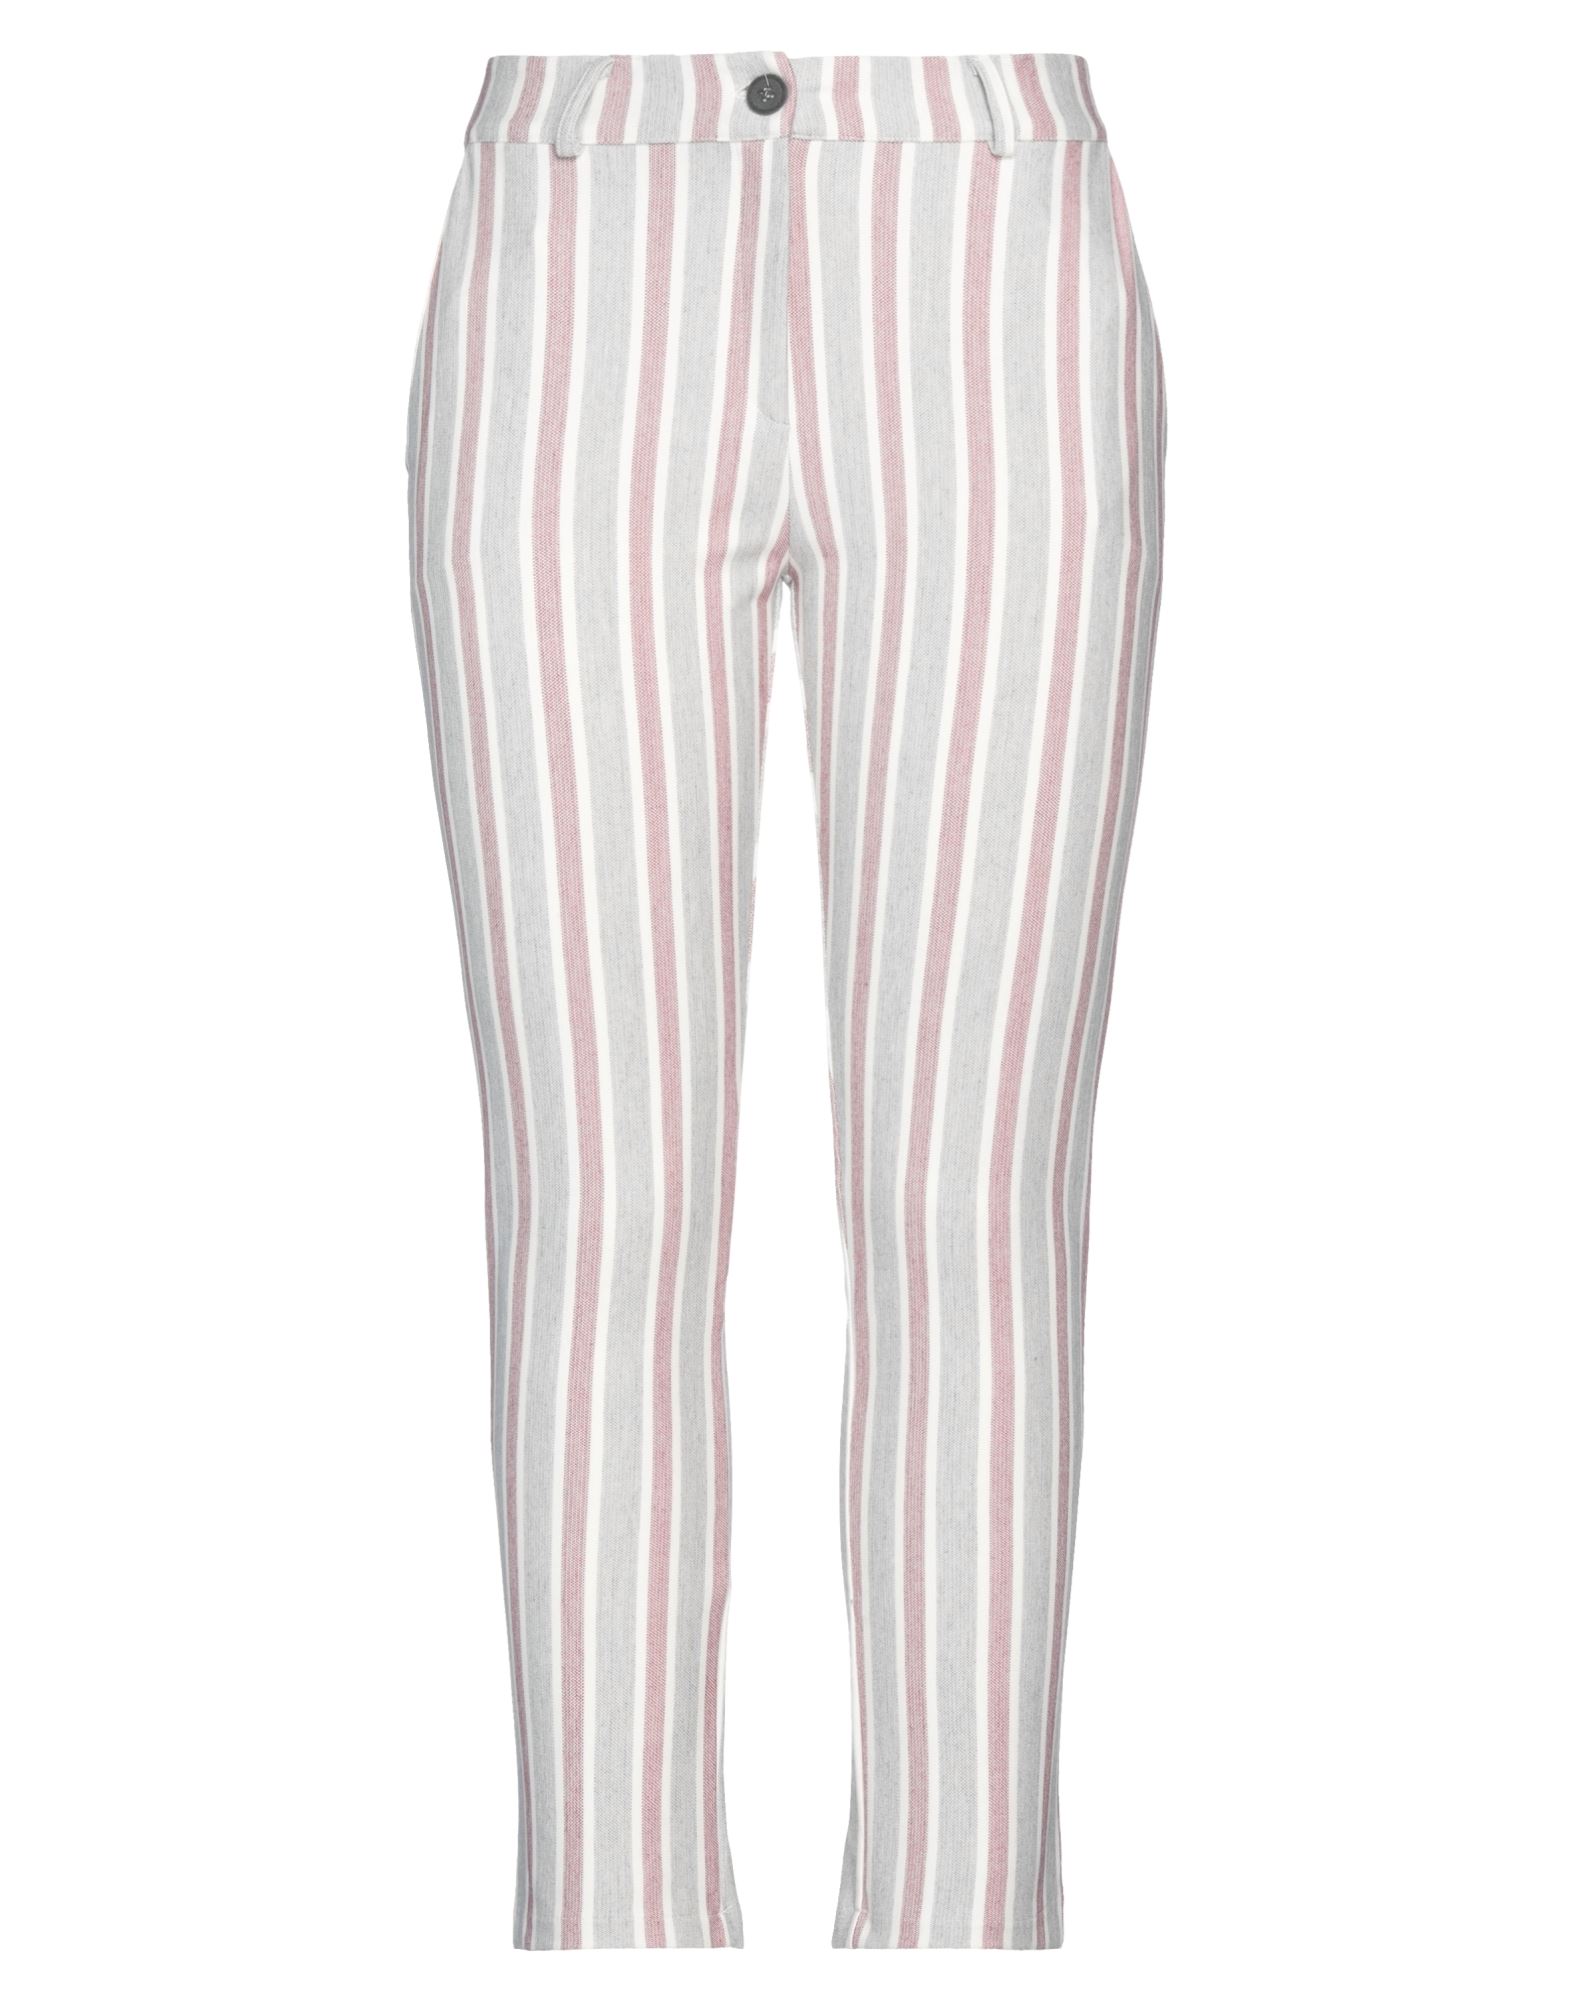 Brand Unique Pants In Grey